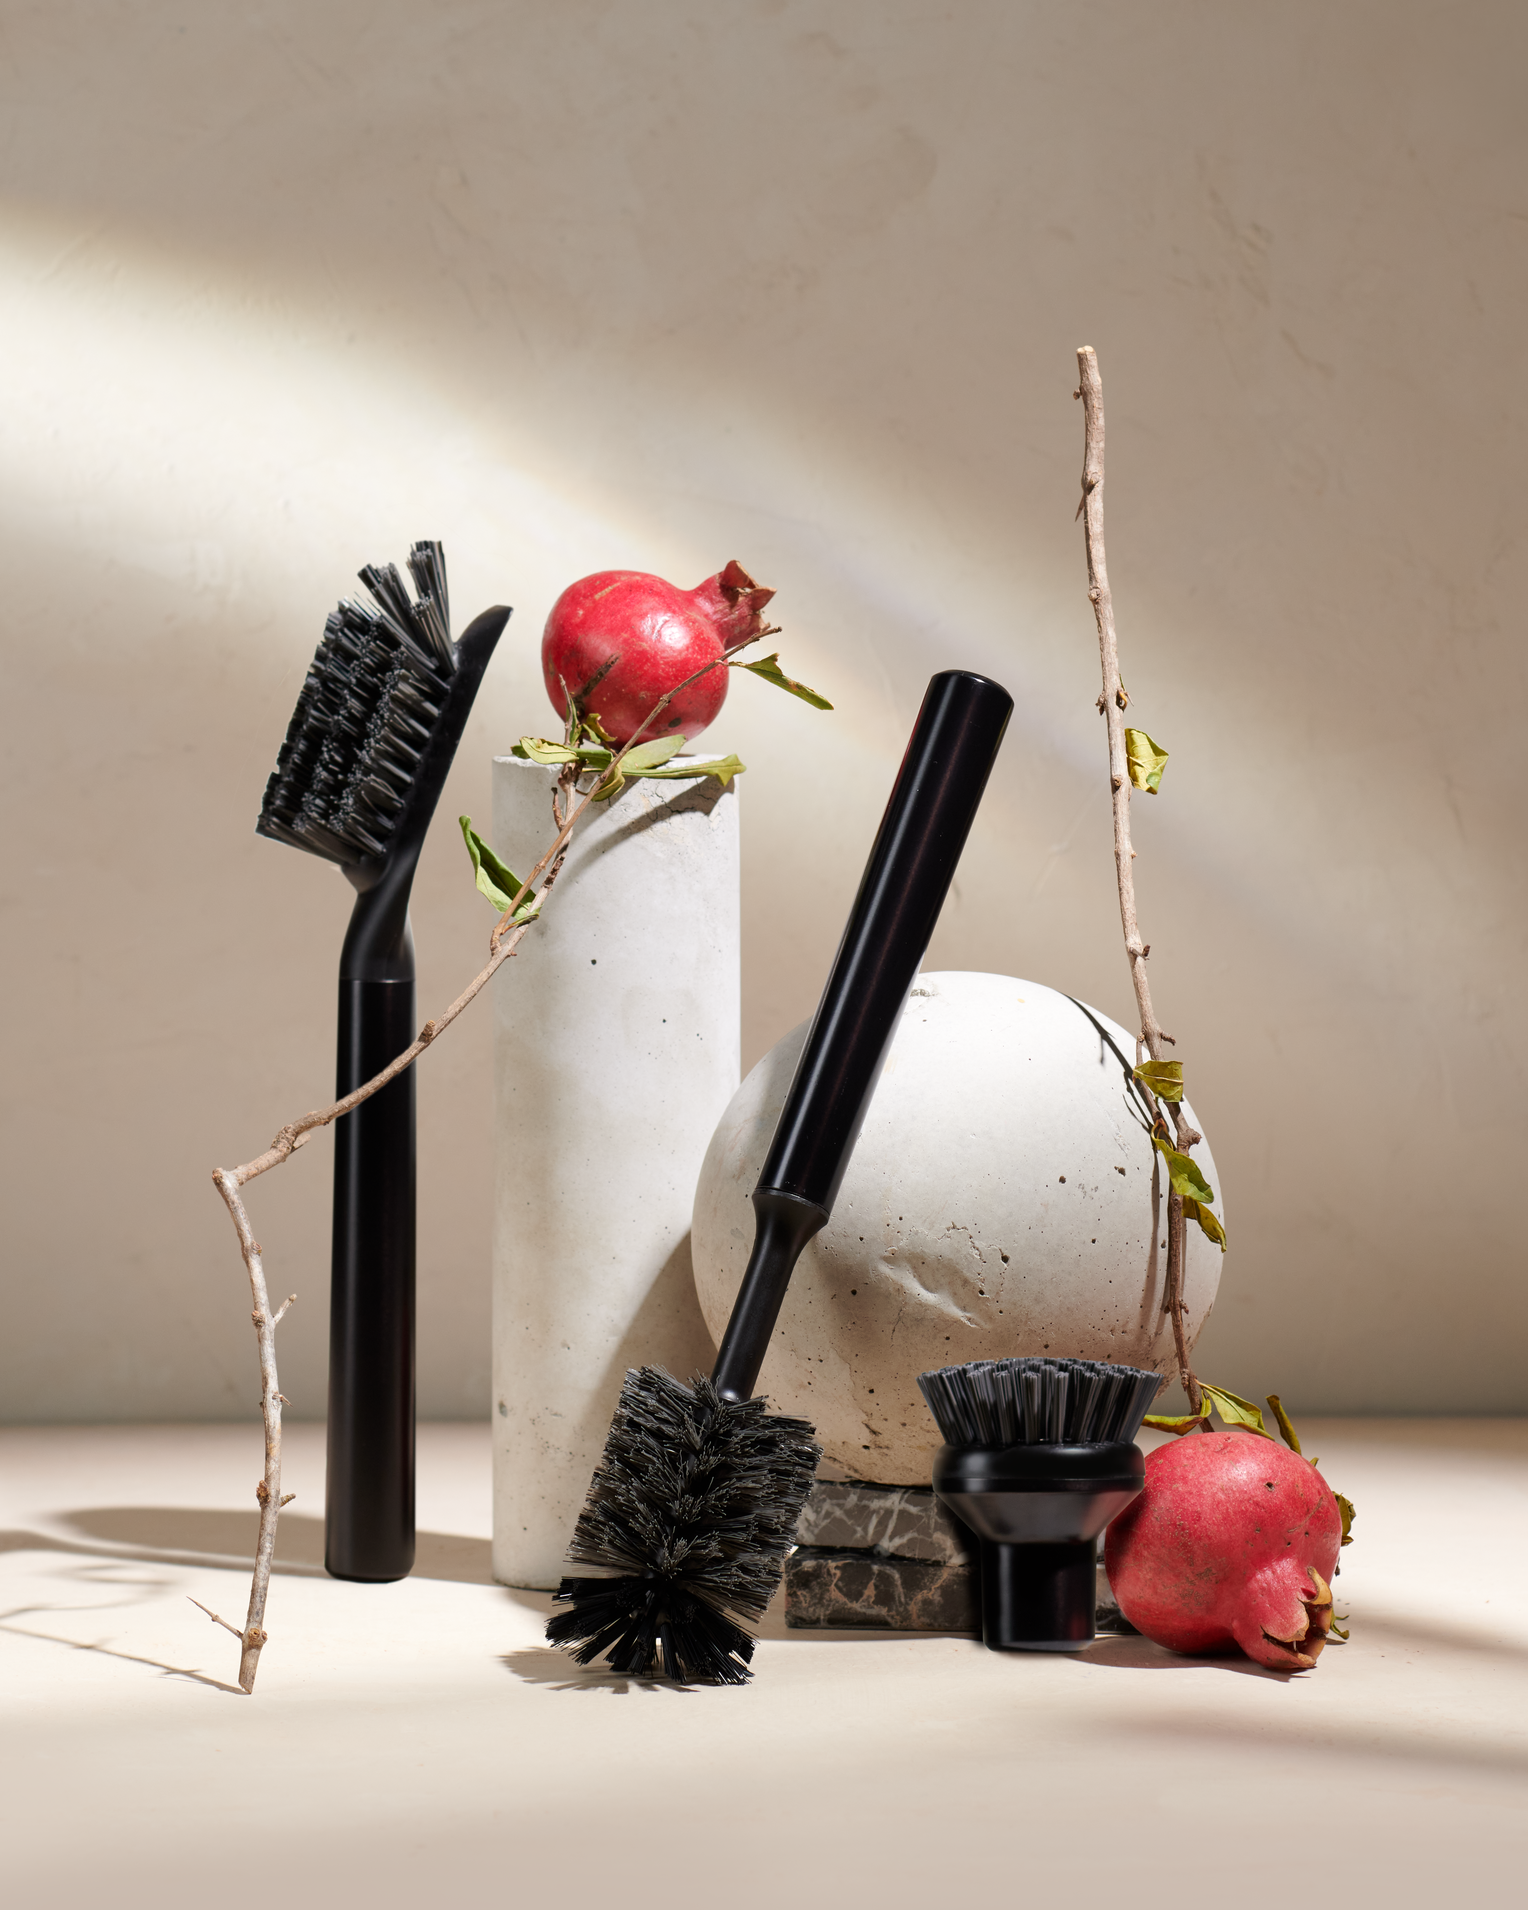 Curio Homegoods Ionic Onyx Brush Set among sculptures and fruits